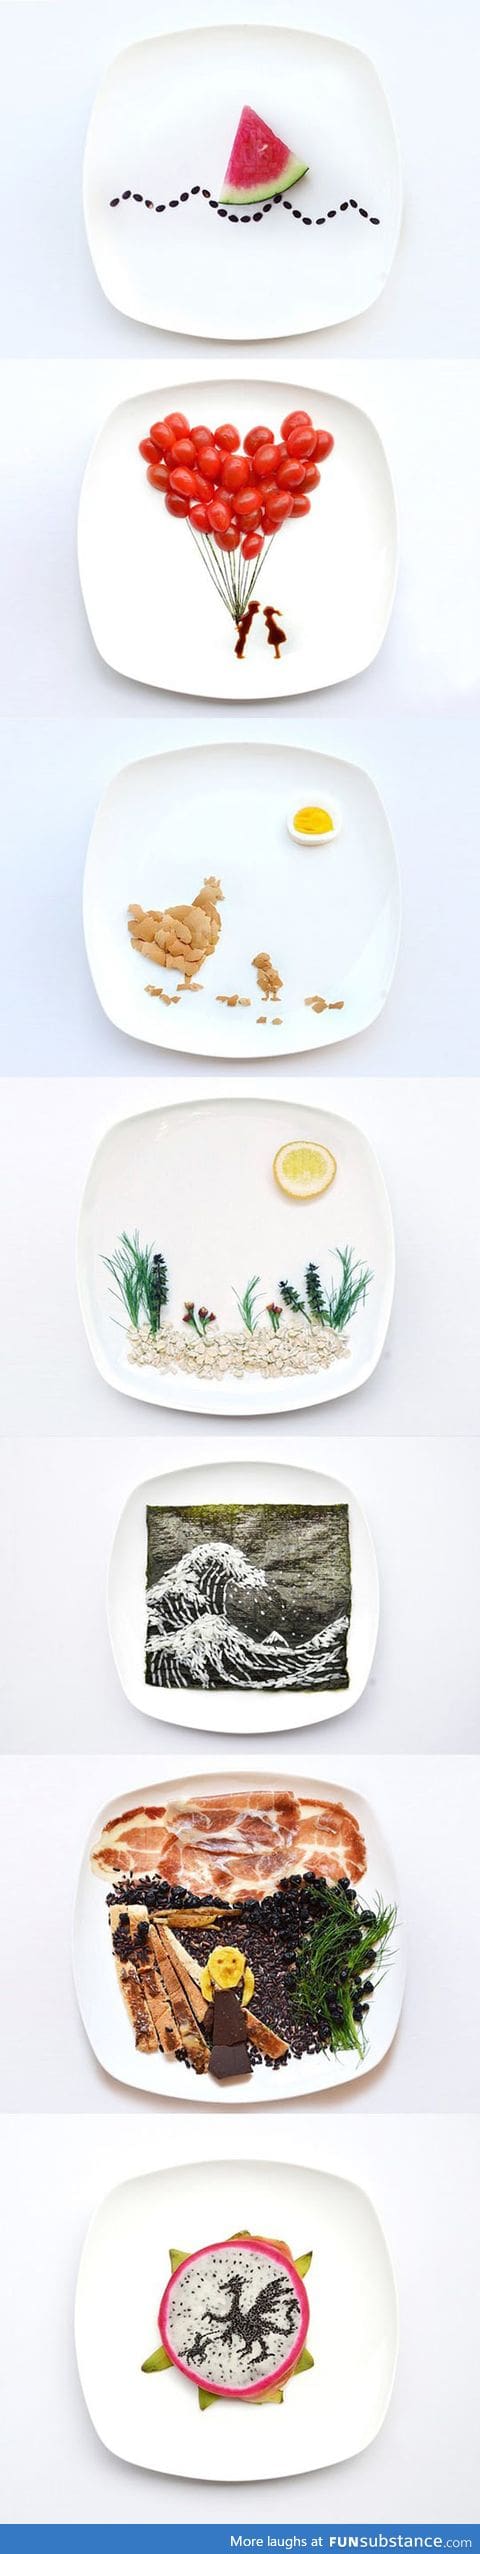 Creativity with food